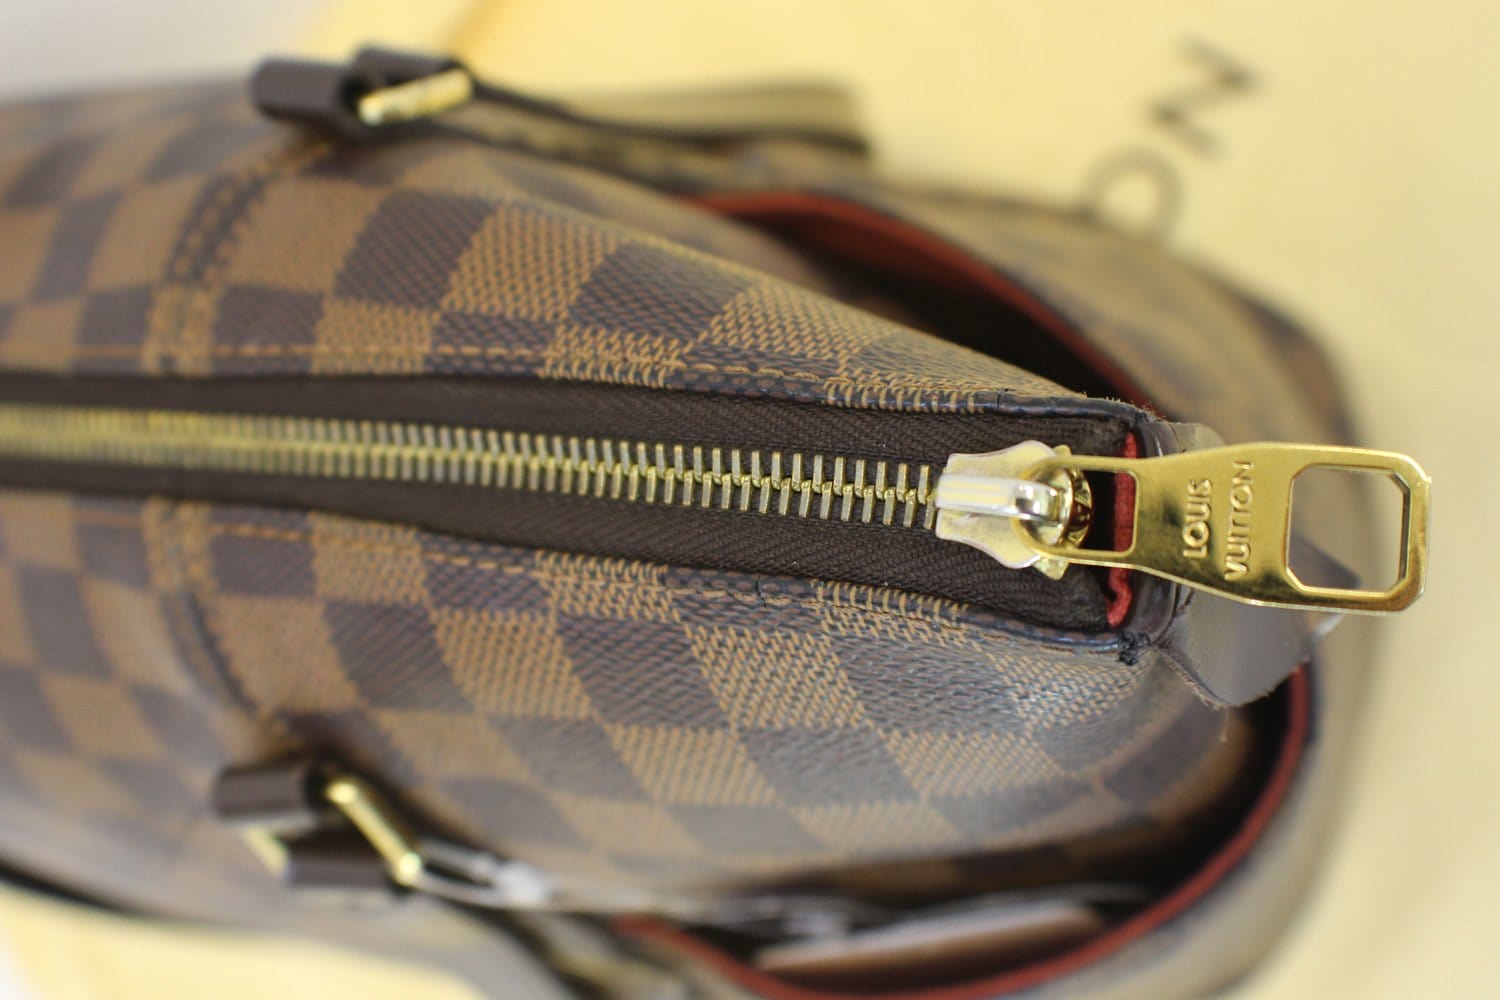 Louis Vuitton Totally MM damier ebene - Good or Bag